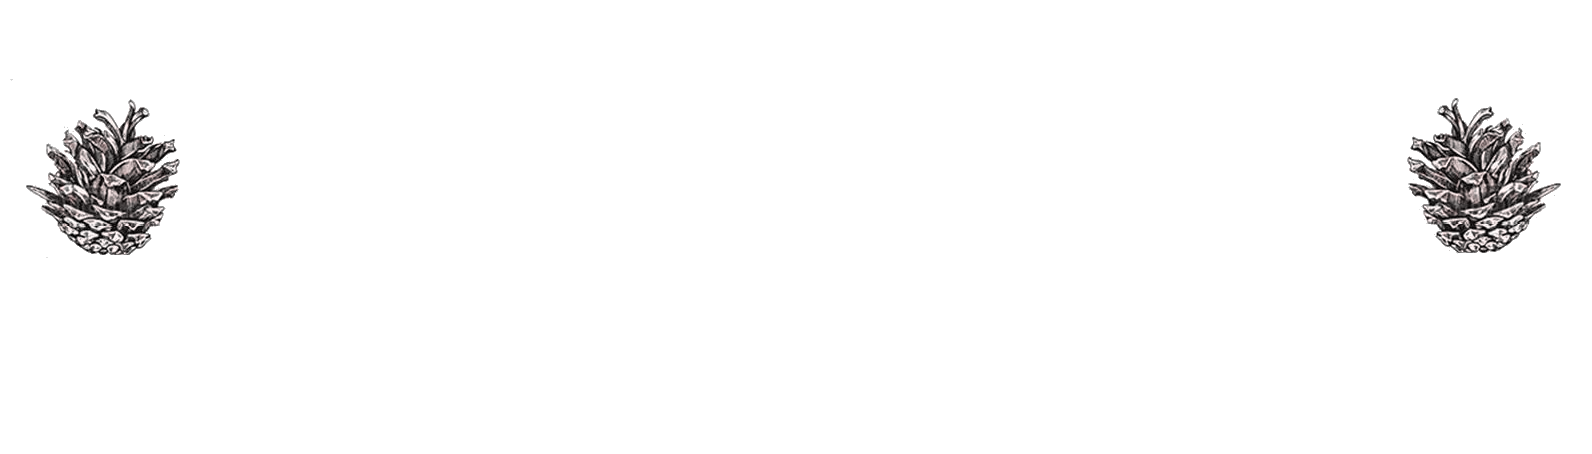 House Fedra Logo